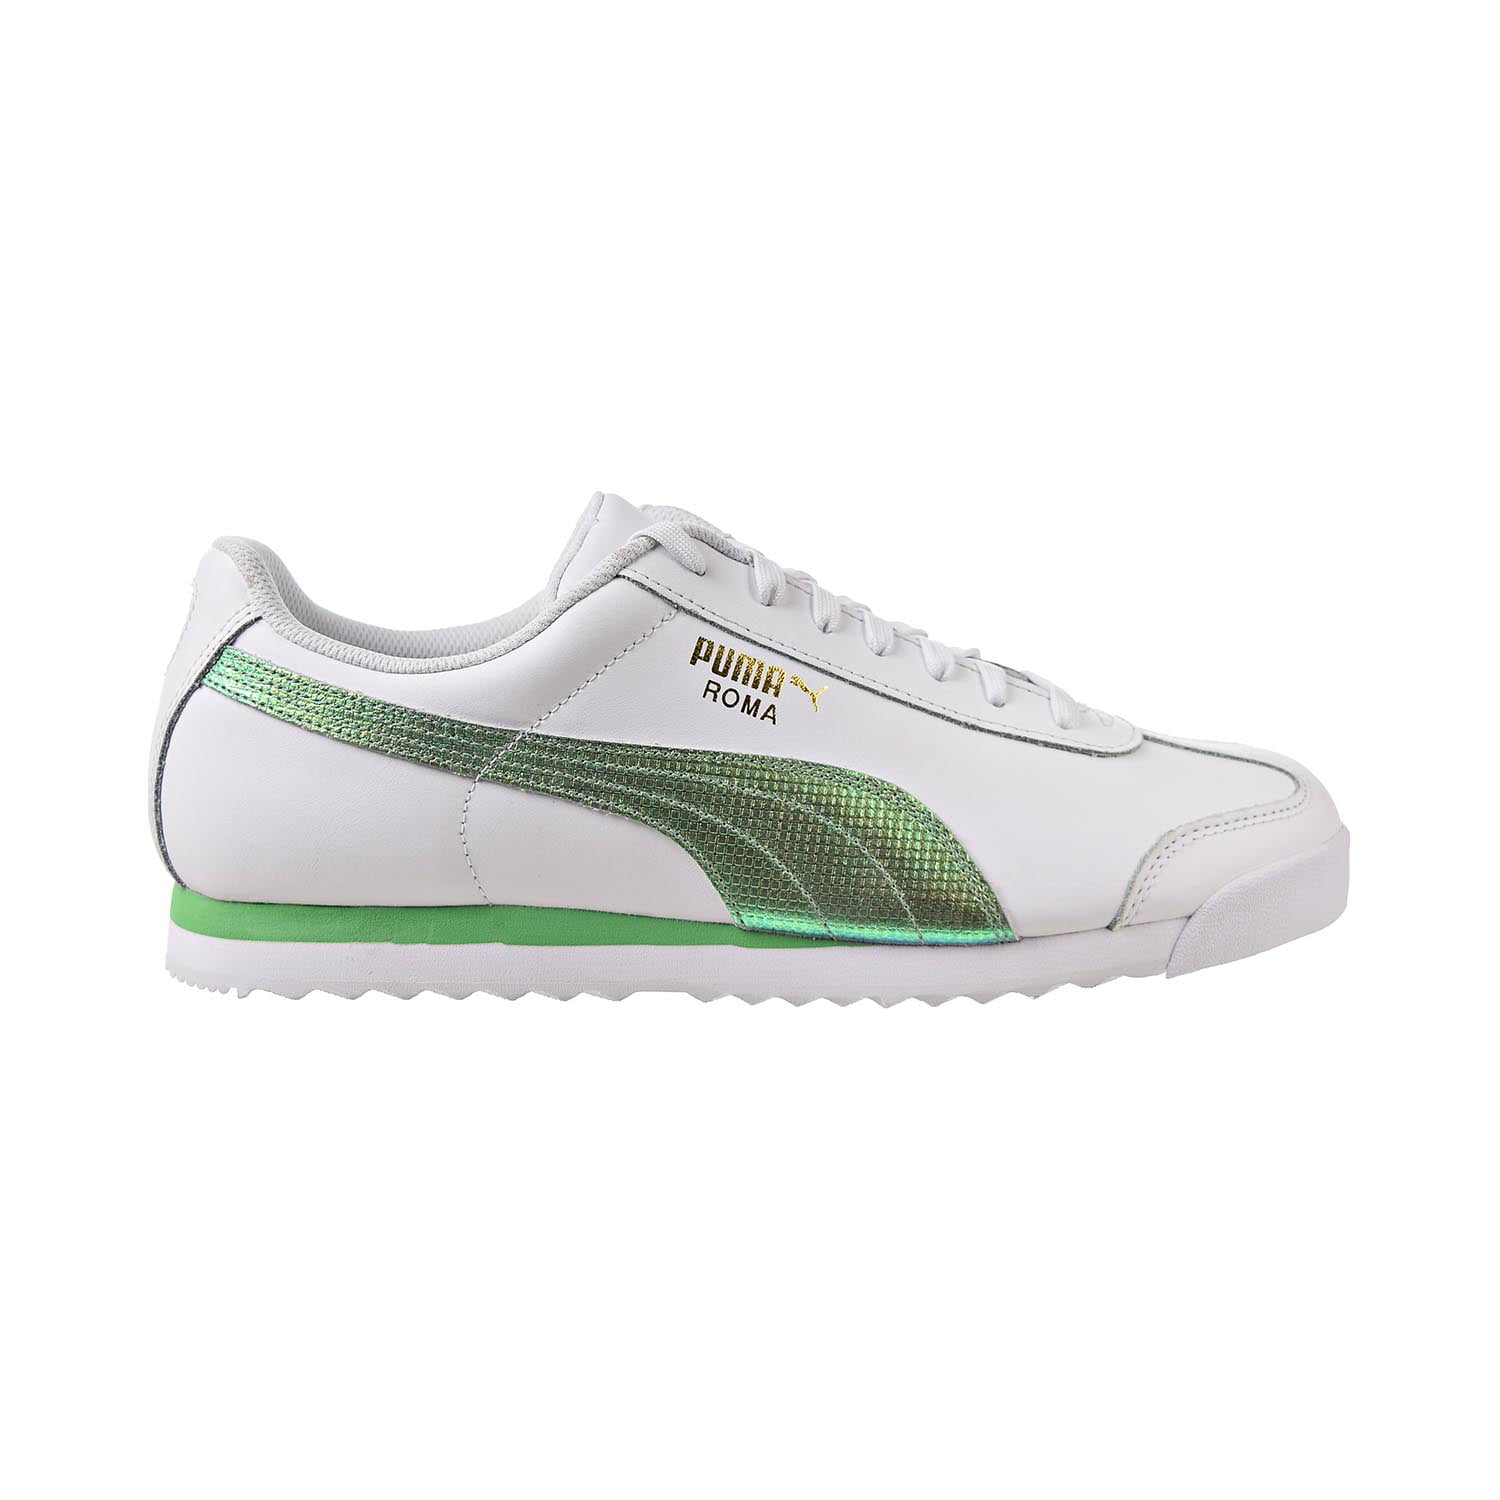 Roma Classic Holo Men's Shoes Puma White-Green Gecko - Walmart.com